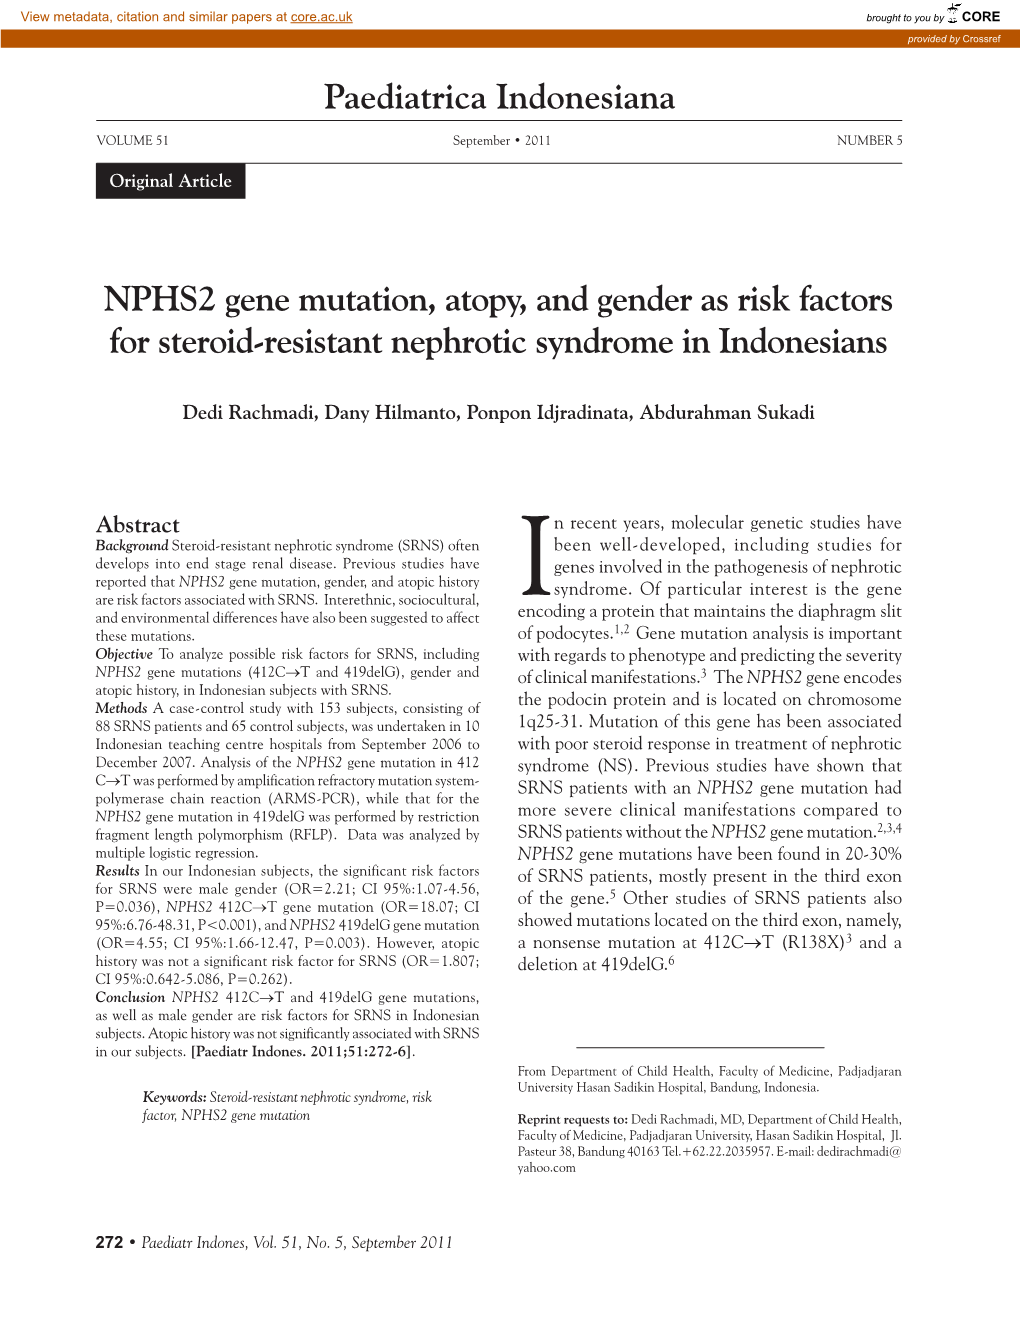 Paediatrica Indonesiana NPHS2 Gene Mutation, Atopy, And